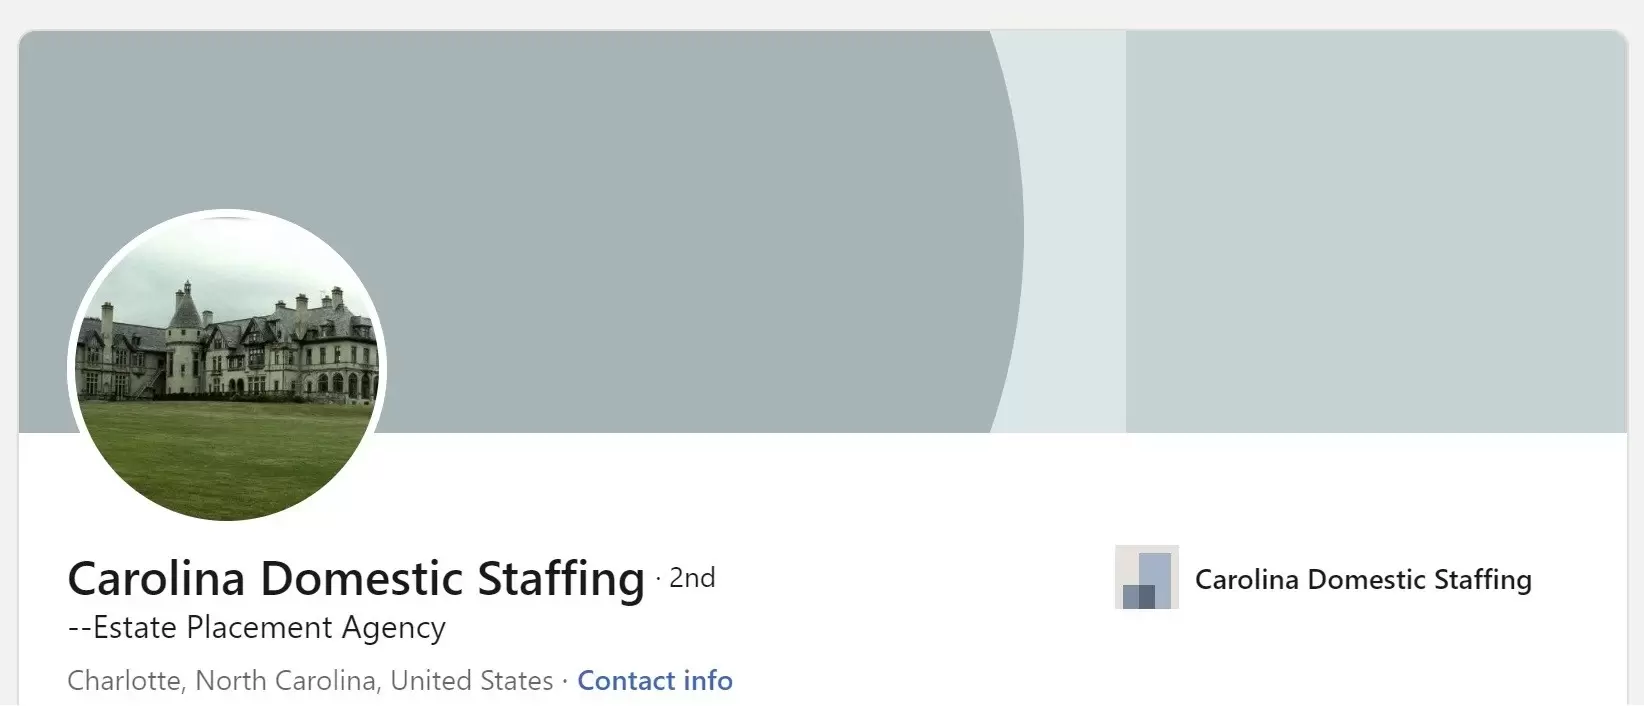 Carolina Domestic Staffing on LinkedIn